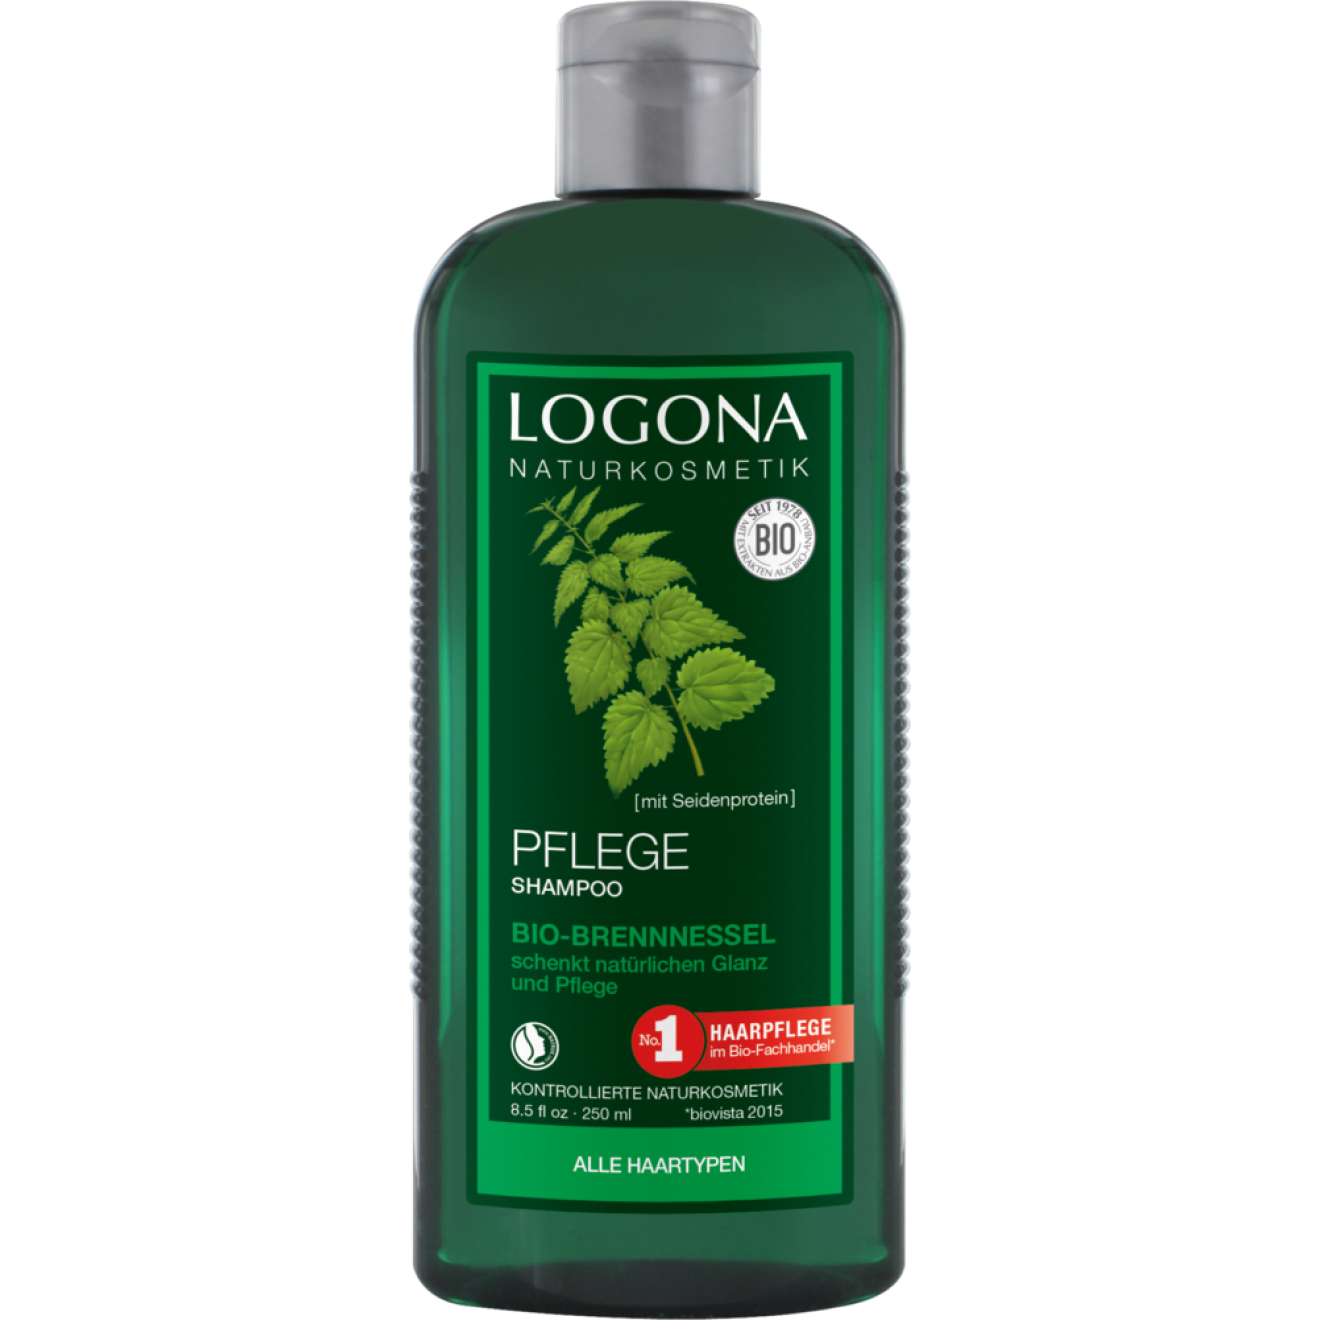 BIO-Brennnessel Pflege Logona Shampoo ml 250